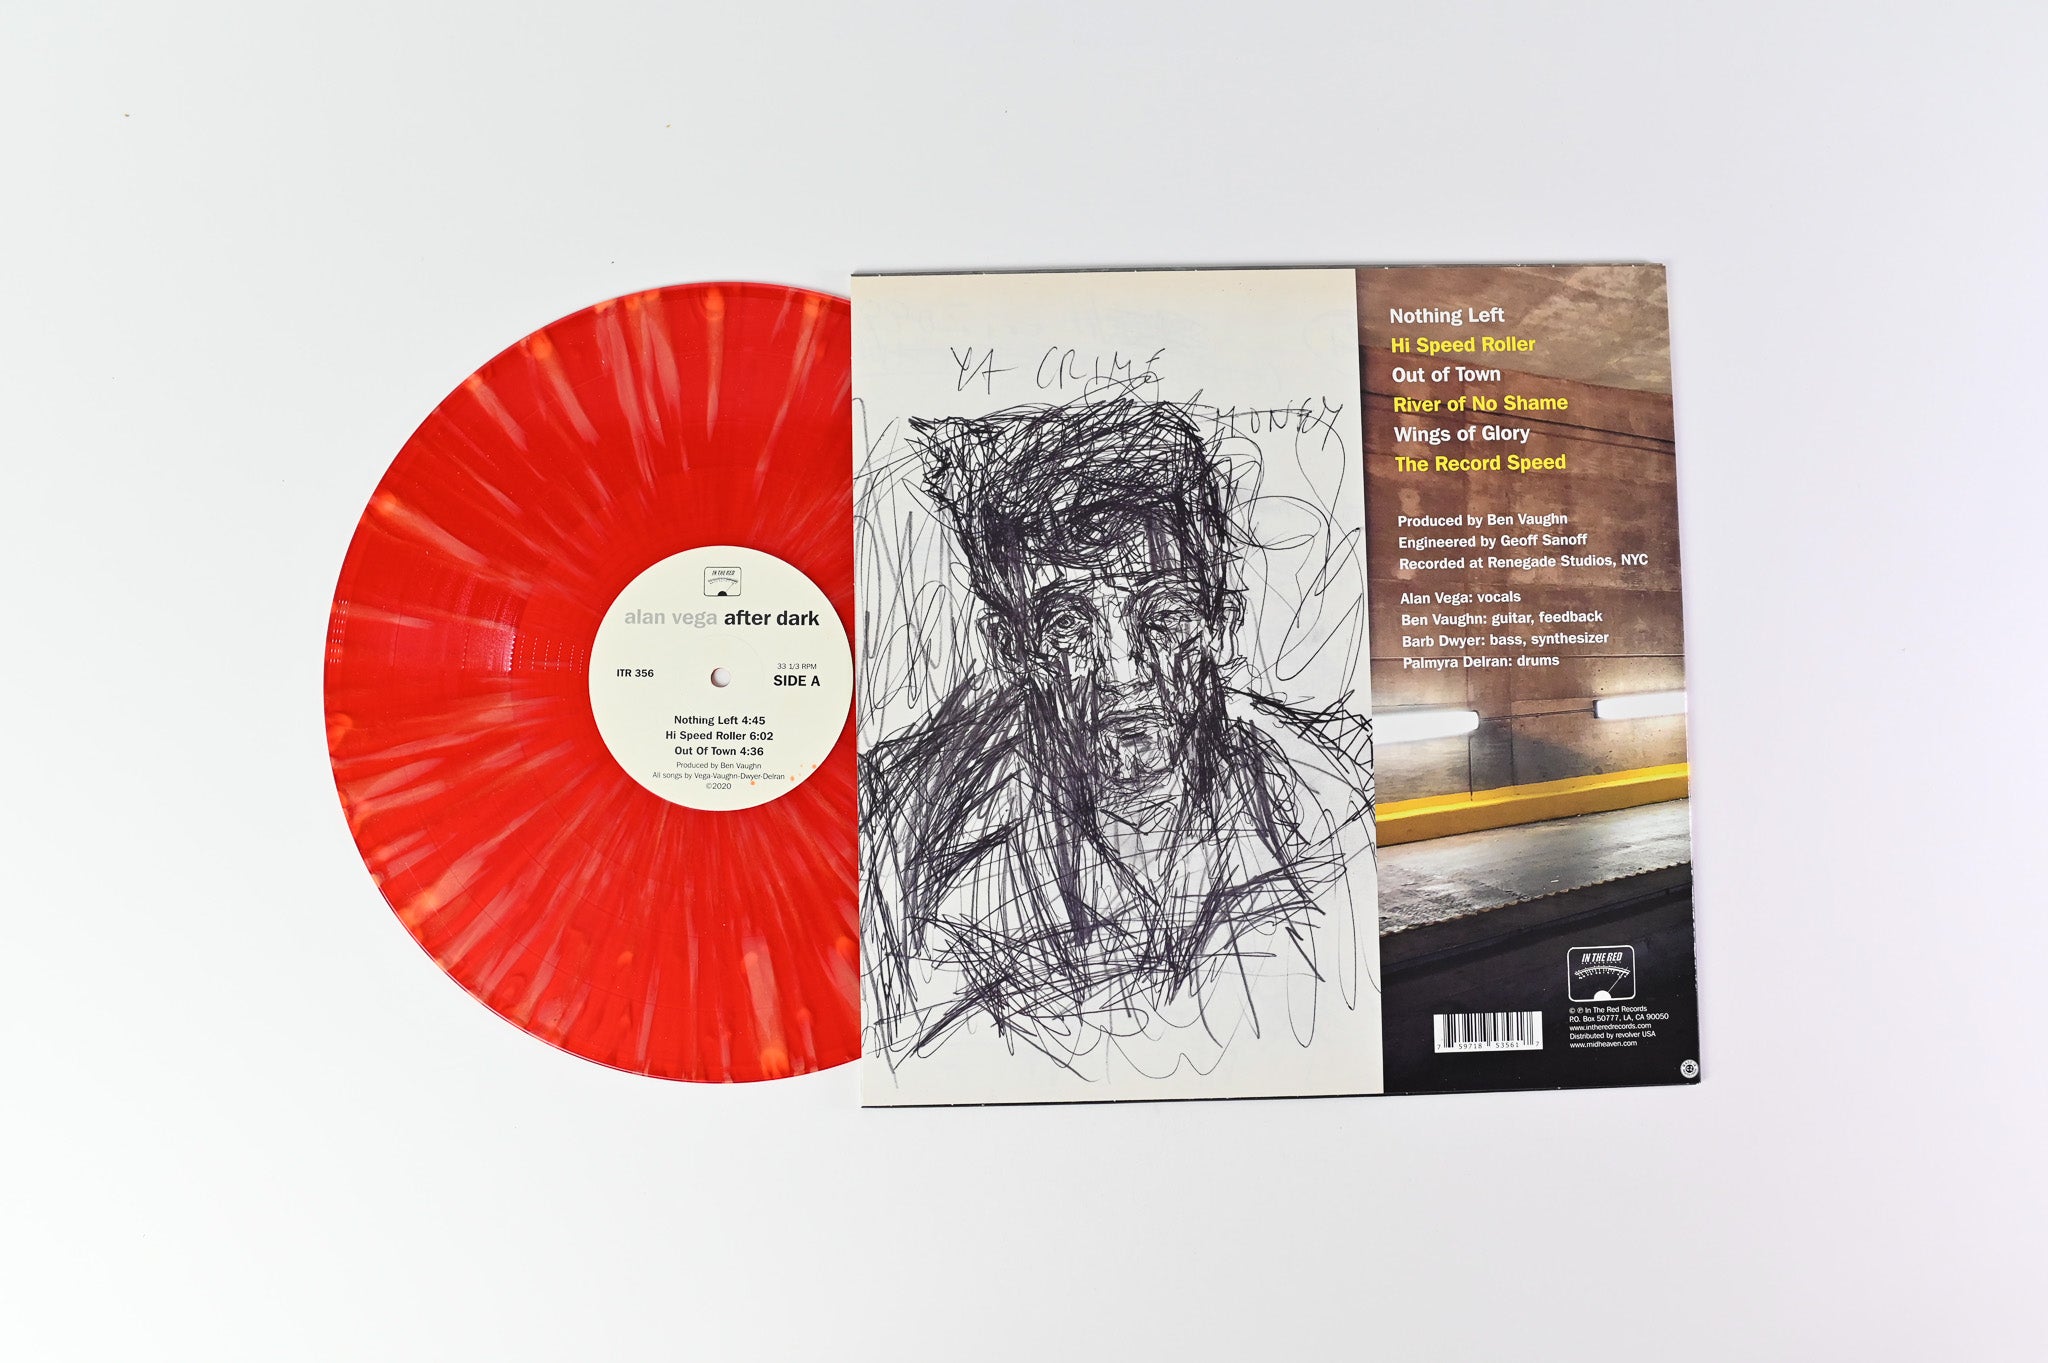 Alan Vega - After Dark on In the Red Recordings Red Splattered Vinyl